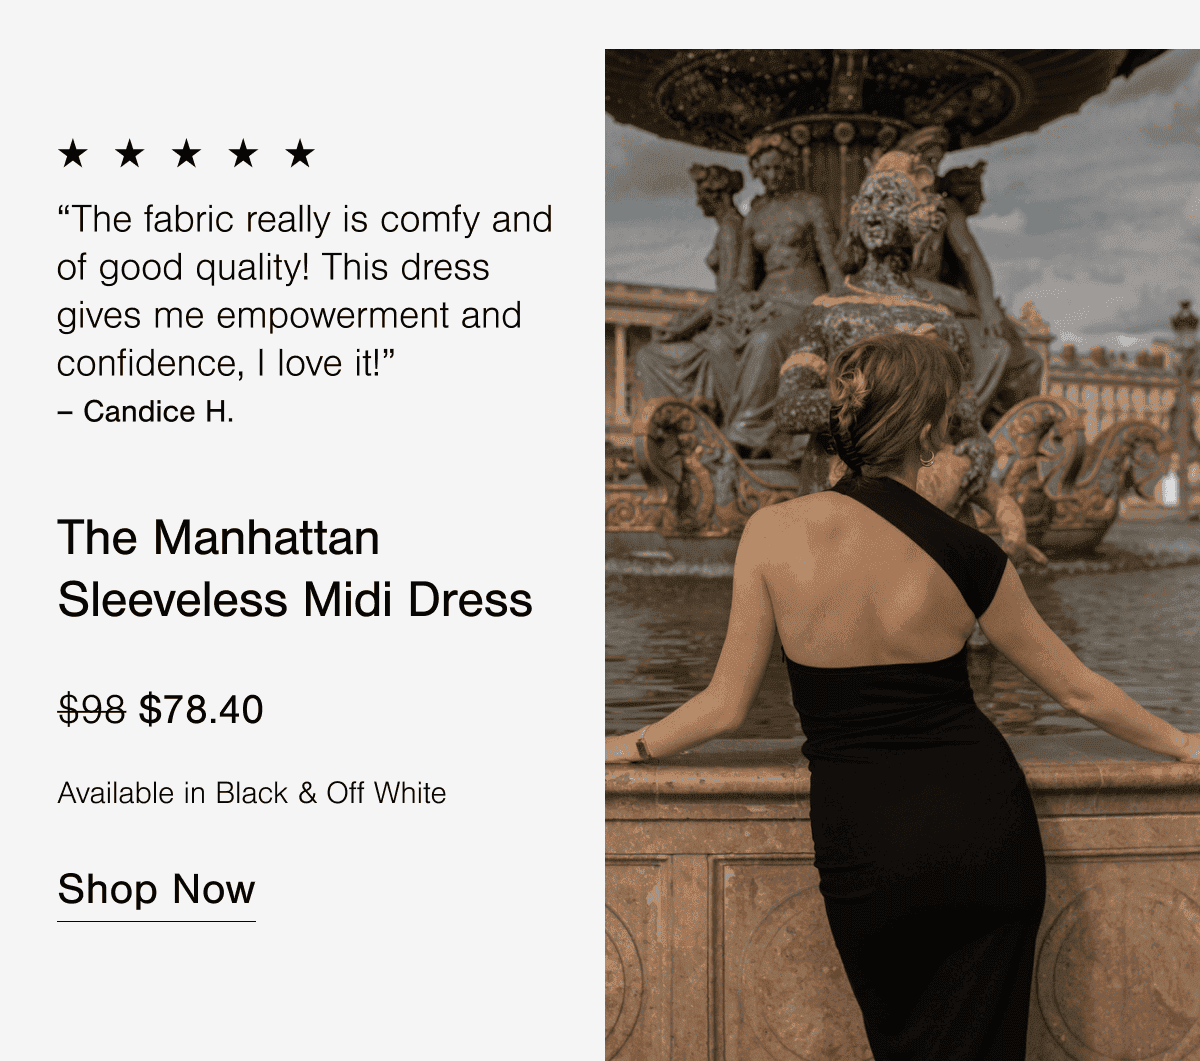 The Manhattan Sleeveless Midi Dress